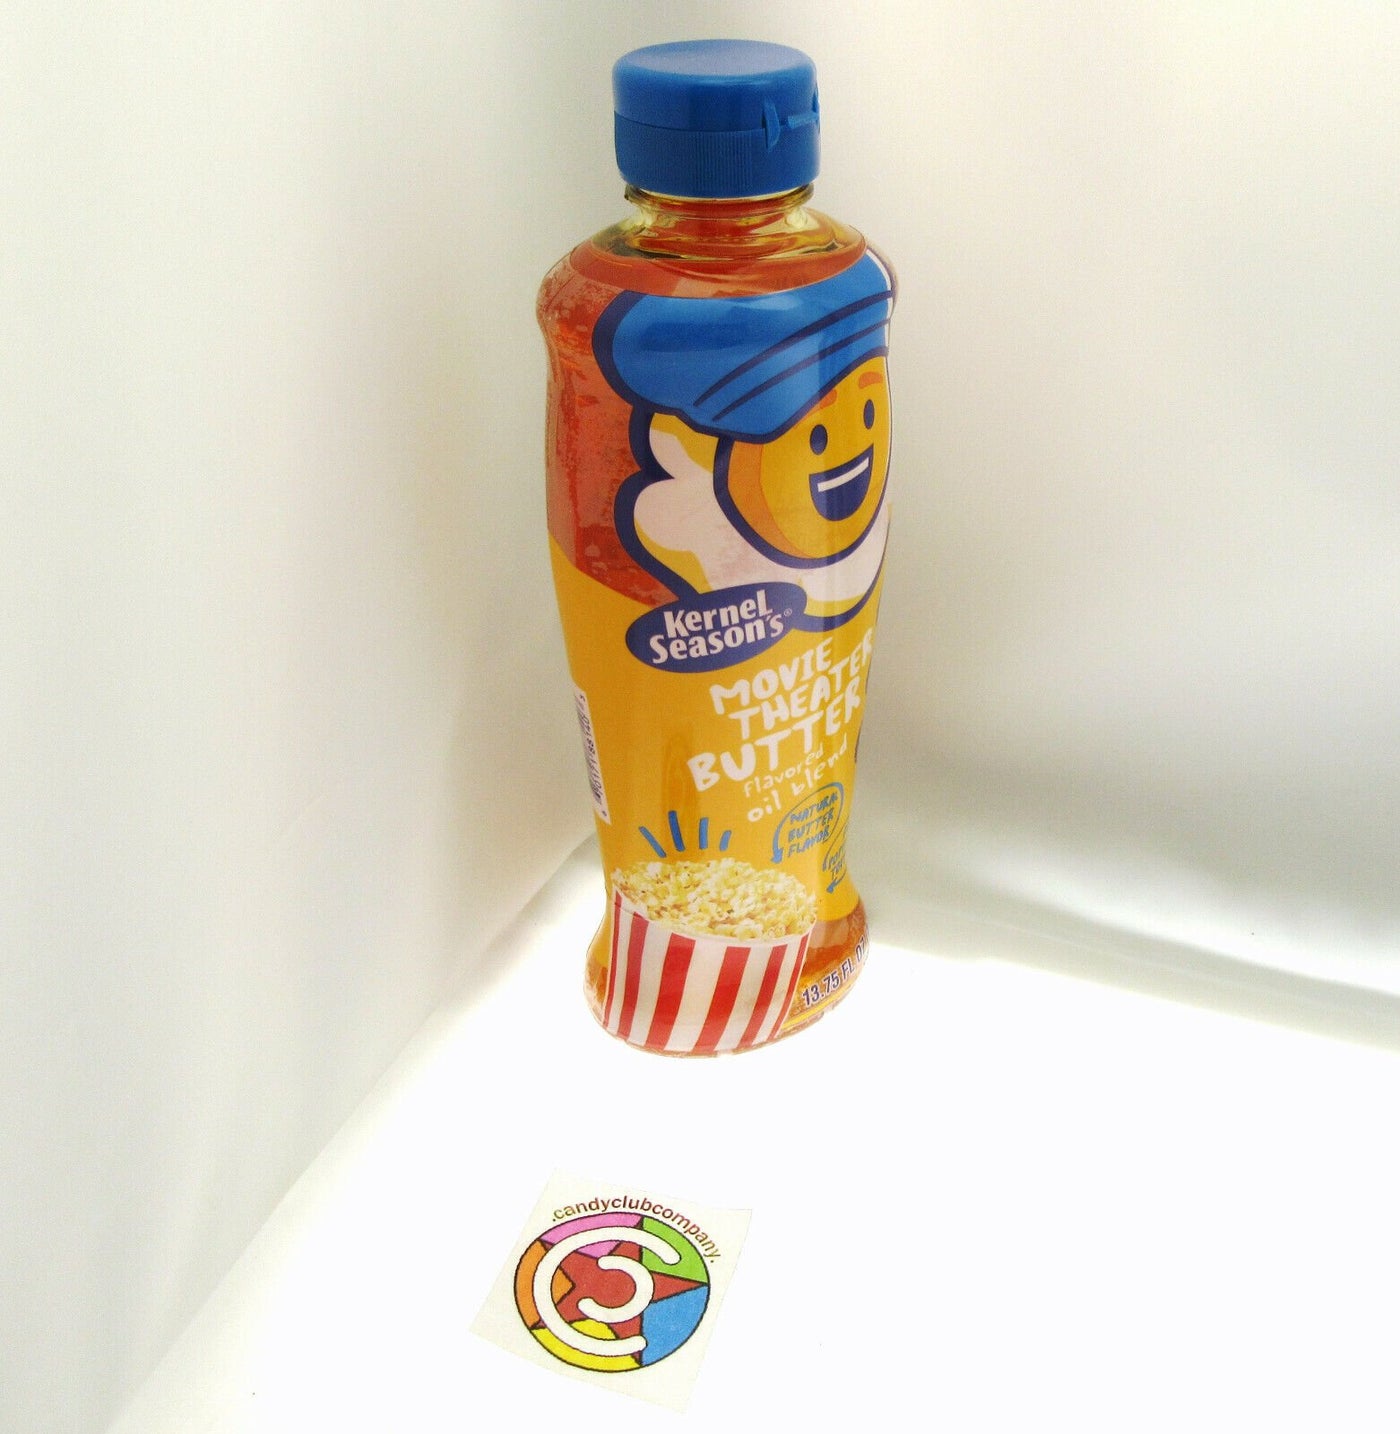 Kernel ~ Movie Theater Butter Flavored Oil Blend ~ For Popcorn ~ 13.75oz Bottle